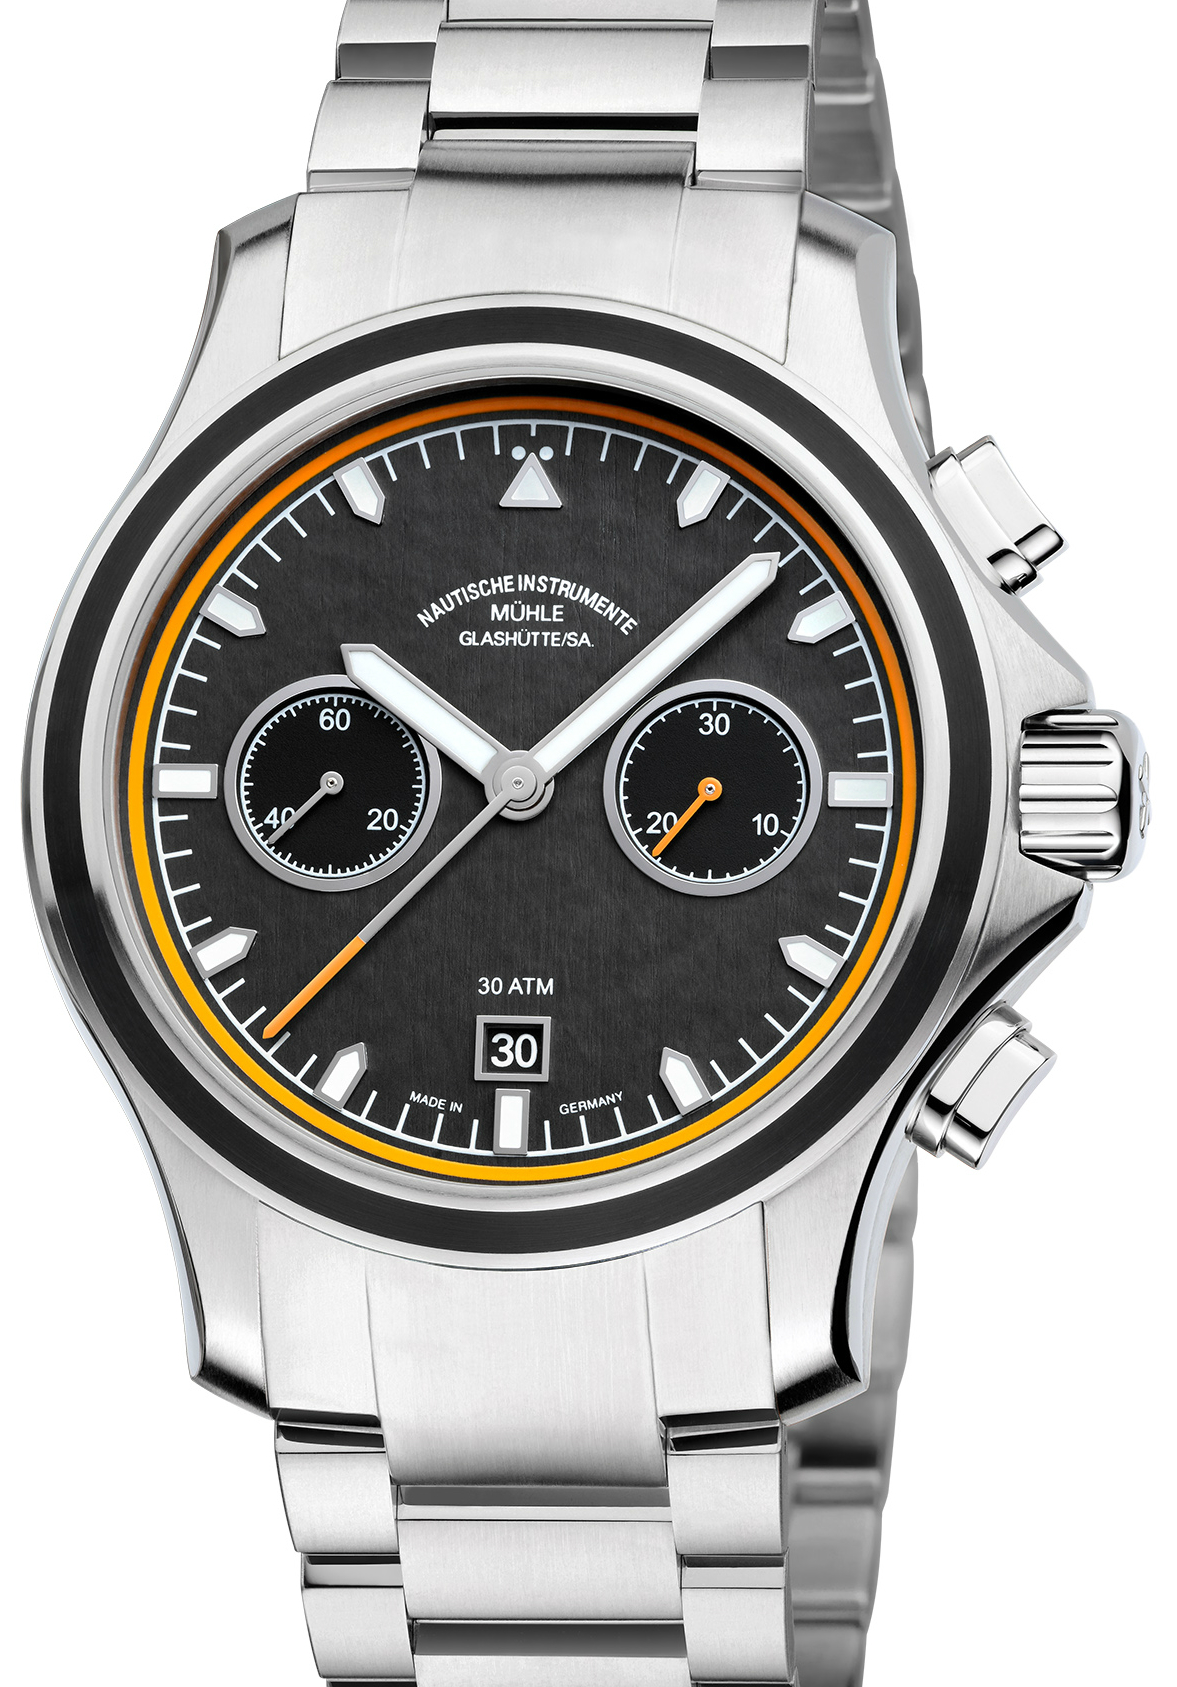 Mühle-Glashütte ProMare Chronograph Watch Watch Releases 